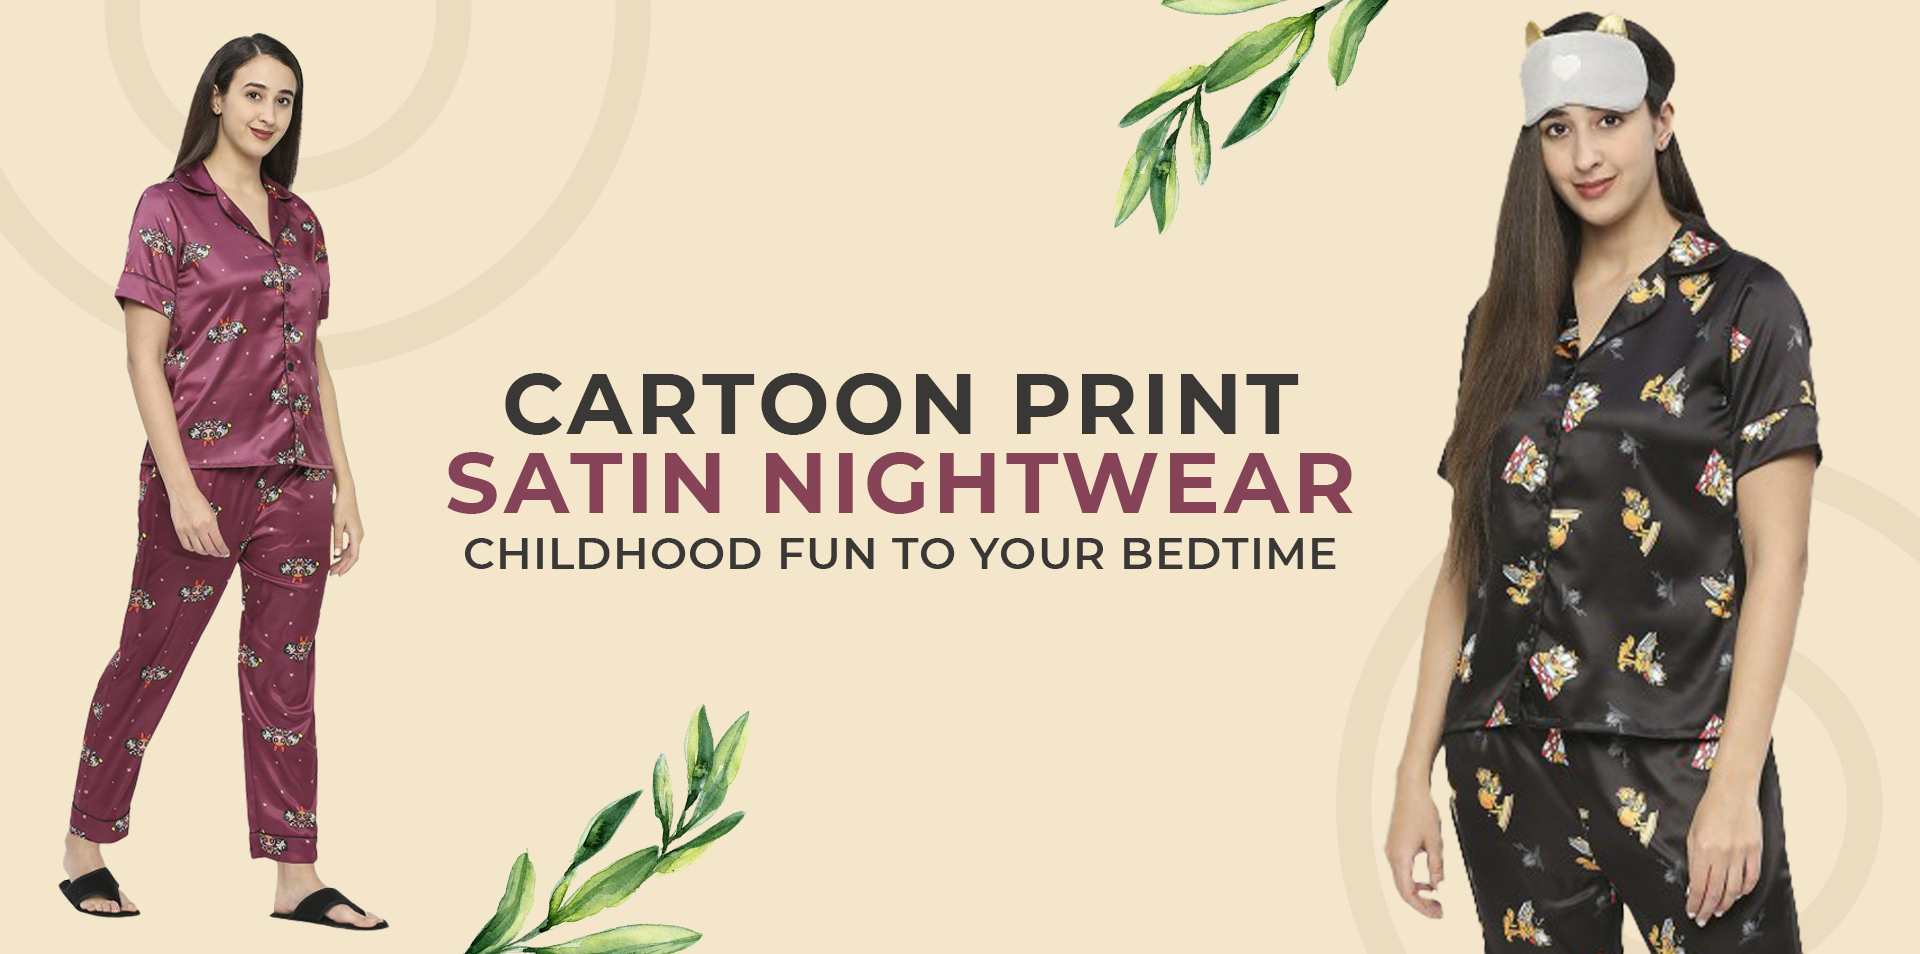 Cartoon Print Satin Nightwear - Childhood Fun to Your Bedtime